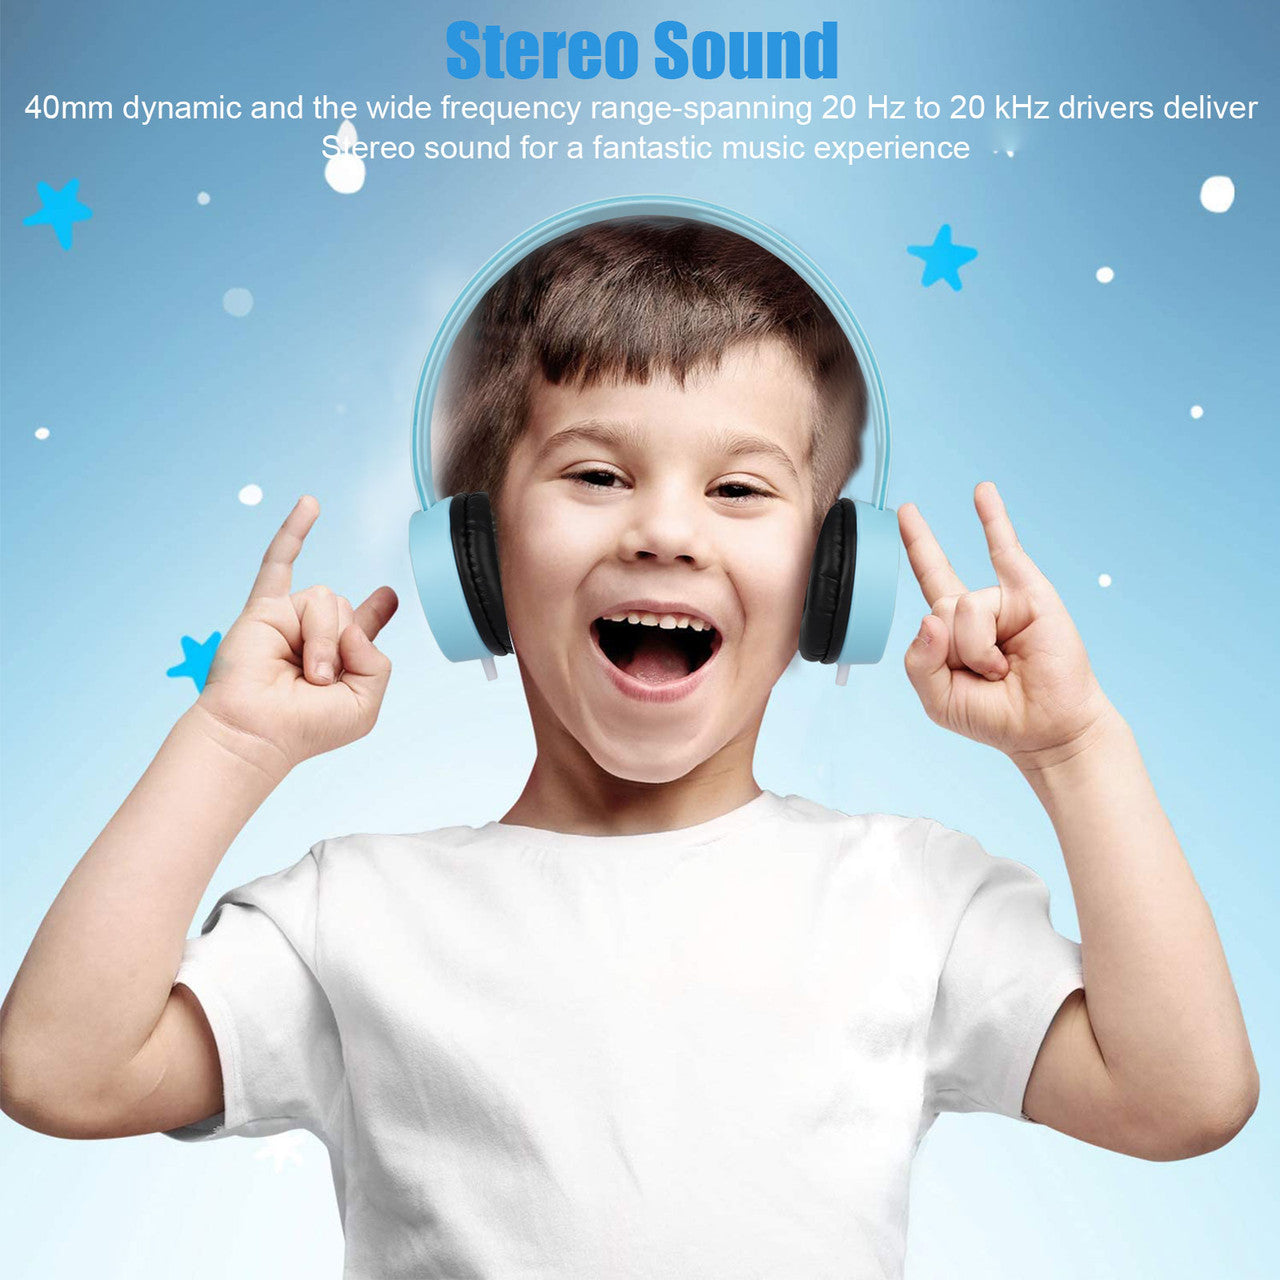 Kids Wired Overear Headphones 3.5MM - Toddler Childrens Boys Girls (Baby Blue)